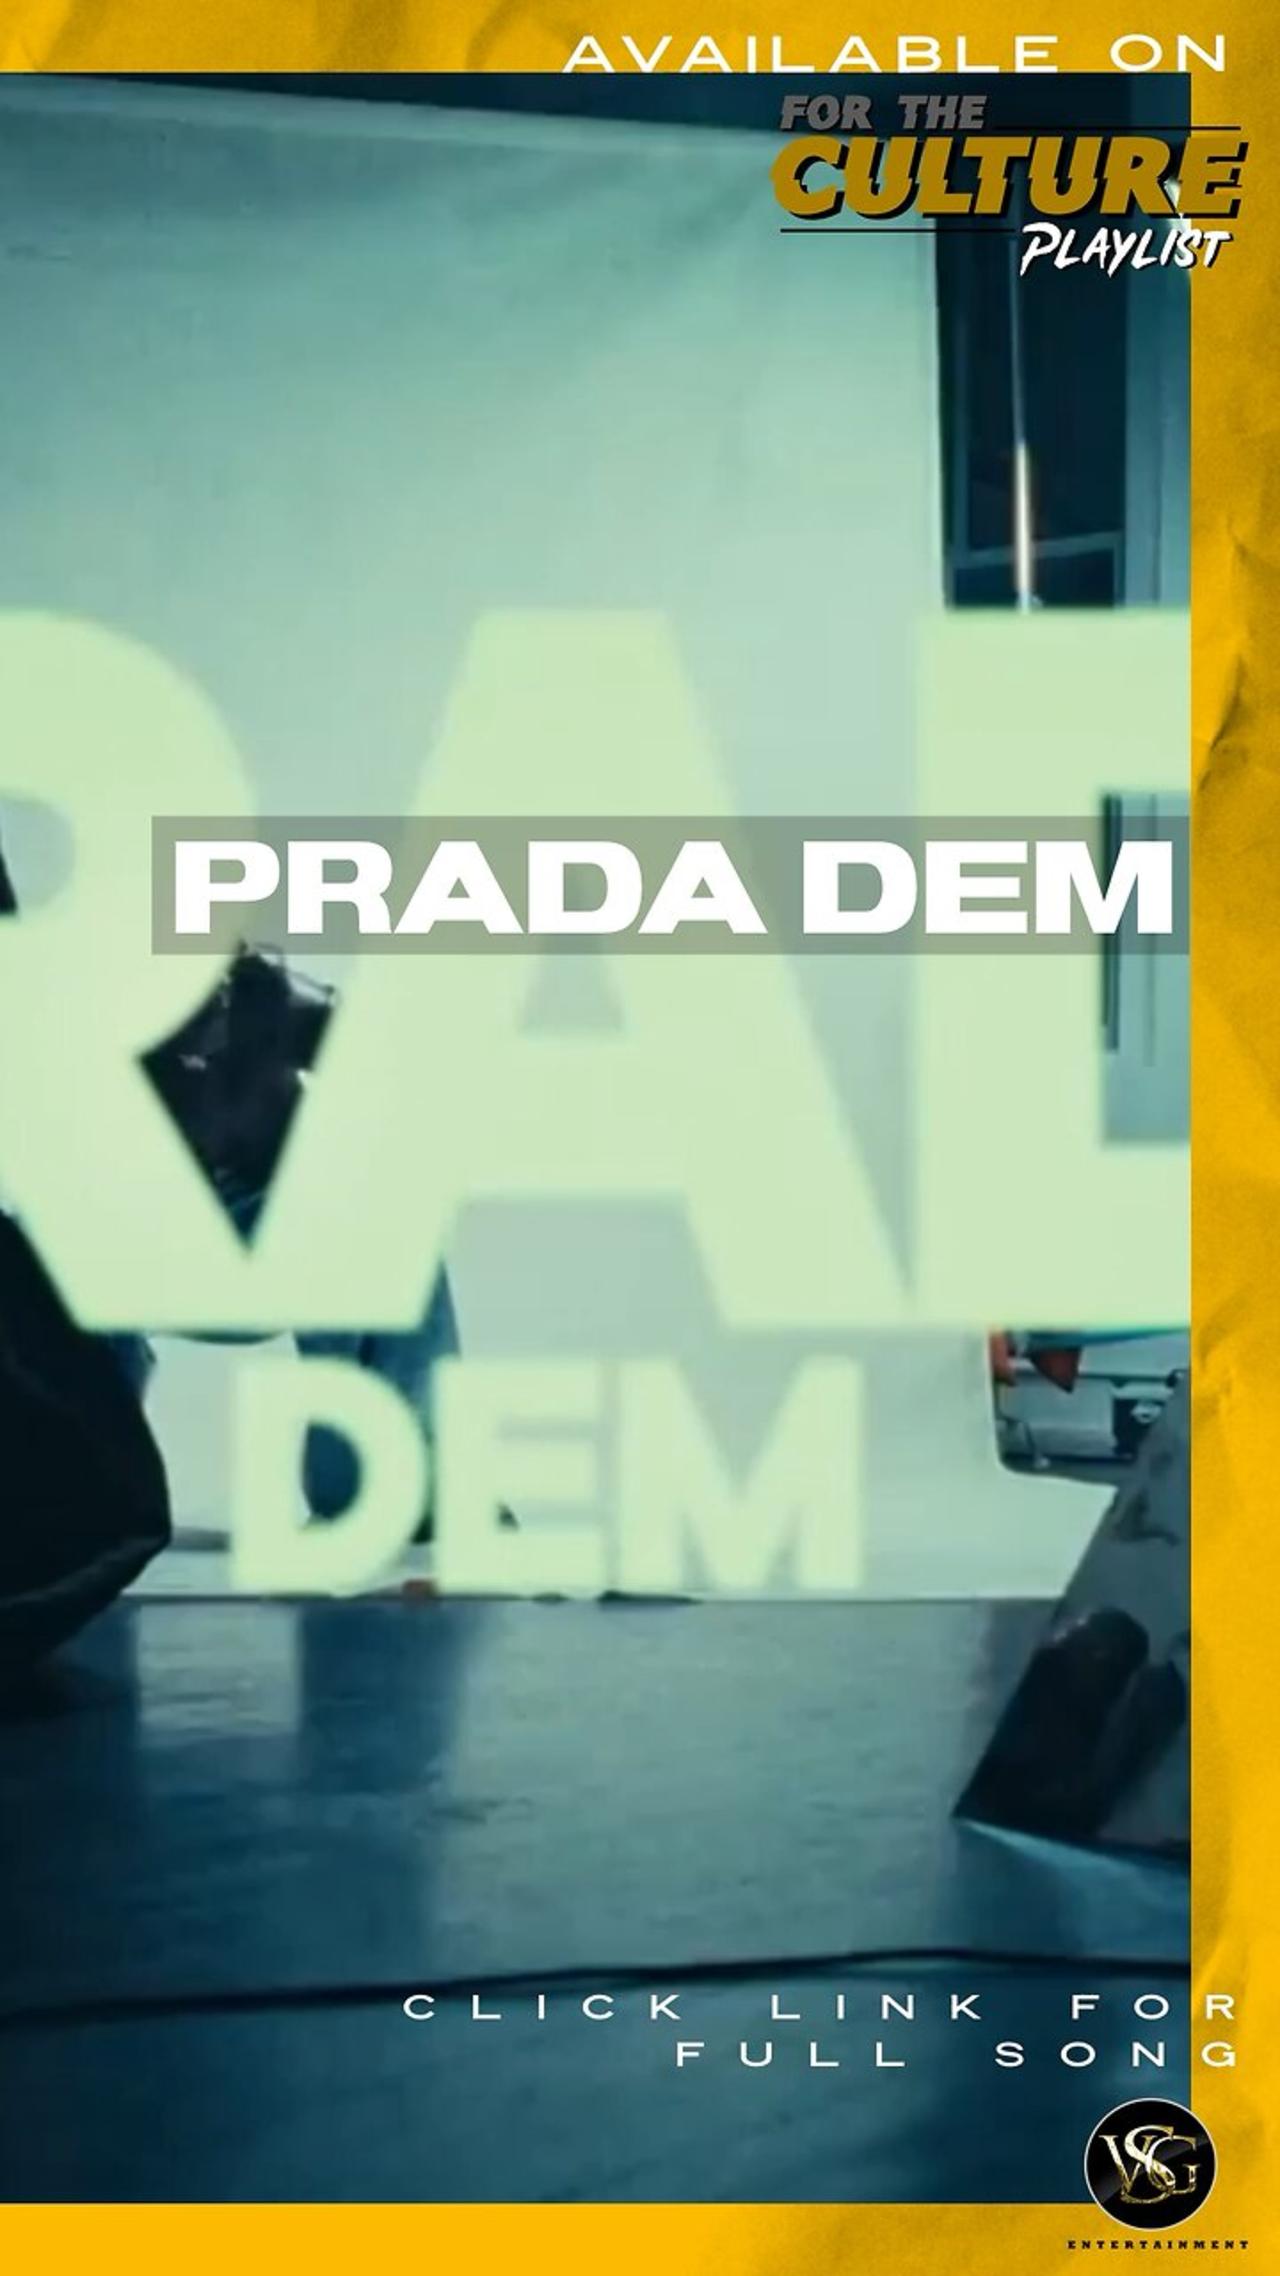 Listen to a clip of @gunna x @offsetyrn - “Prada Dem